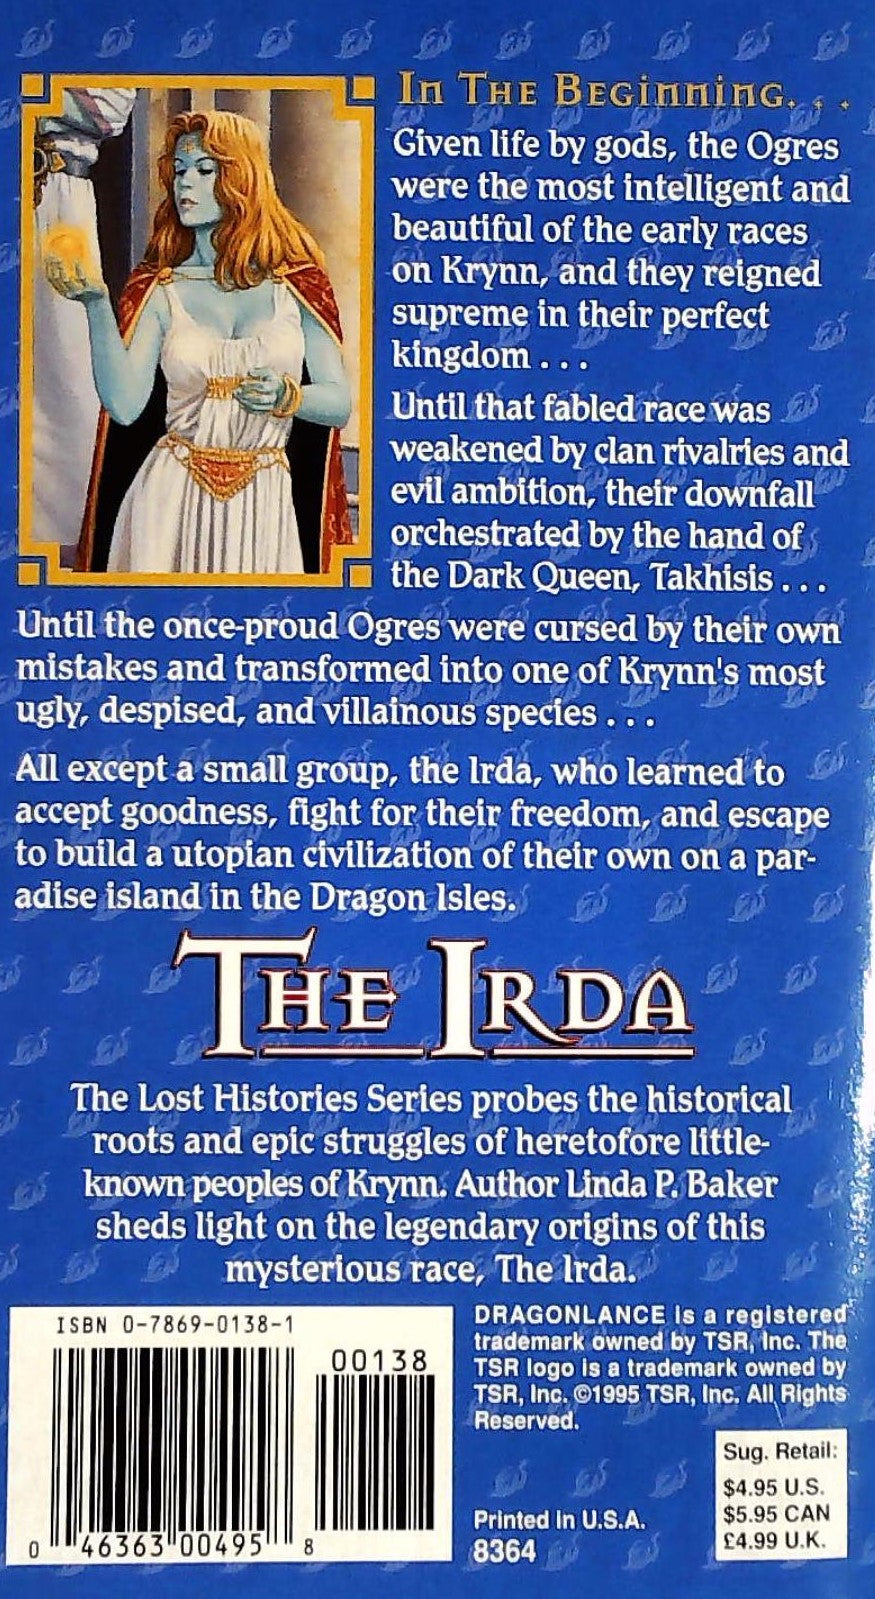 DragonLance : The Lost Histories # 2 : The Irda (Linda P. Baker)